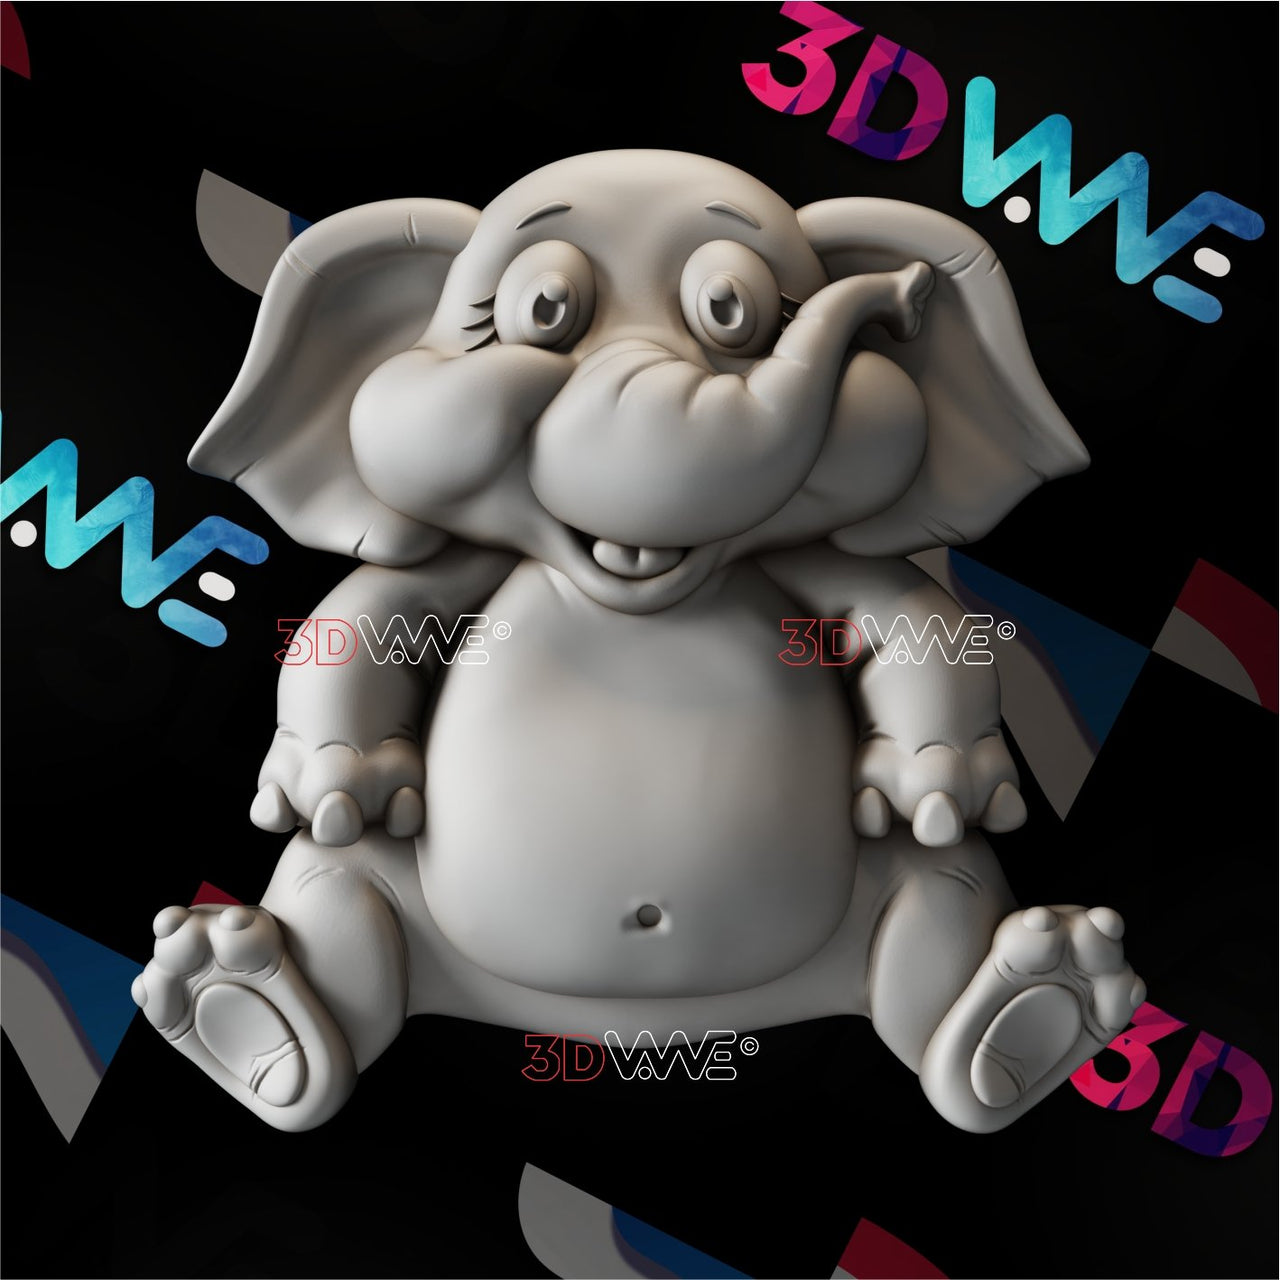 FUNNY ELEPHANT 3d stl 3DWave.us